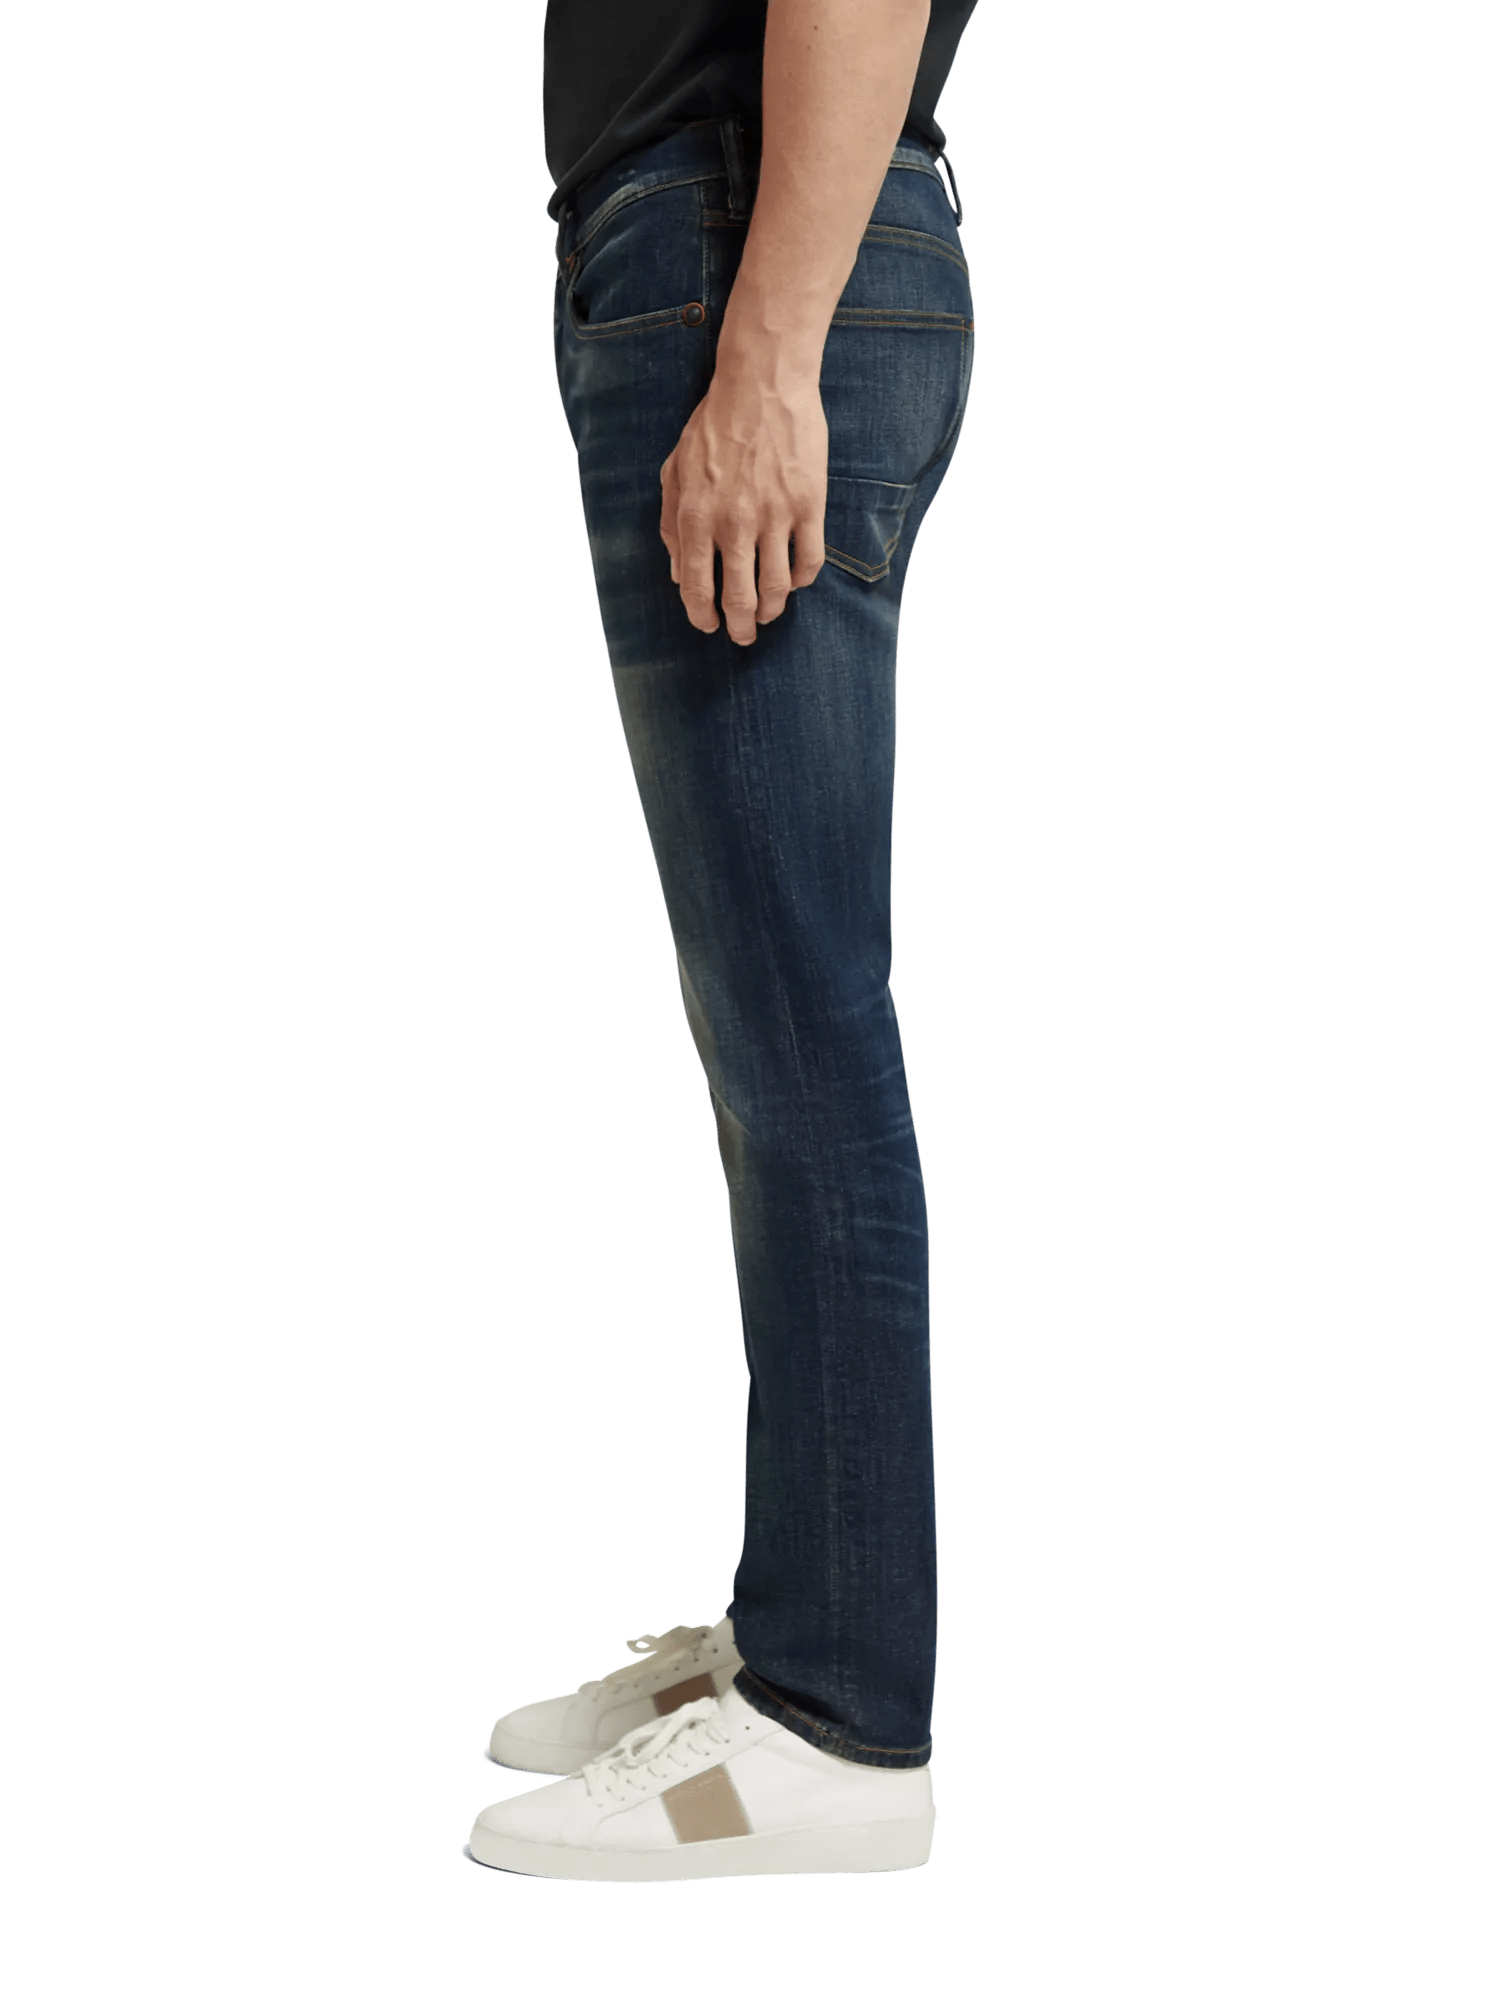 HABEN Skinny Leg Jeans for Men Slim Fit Stretch Tapered Leg Cotton